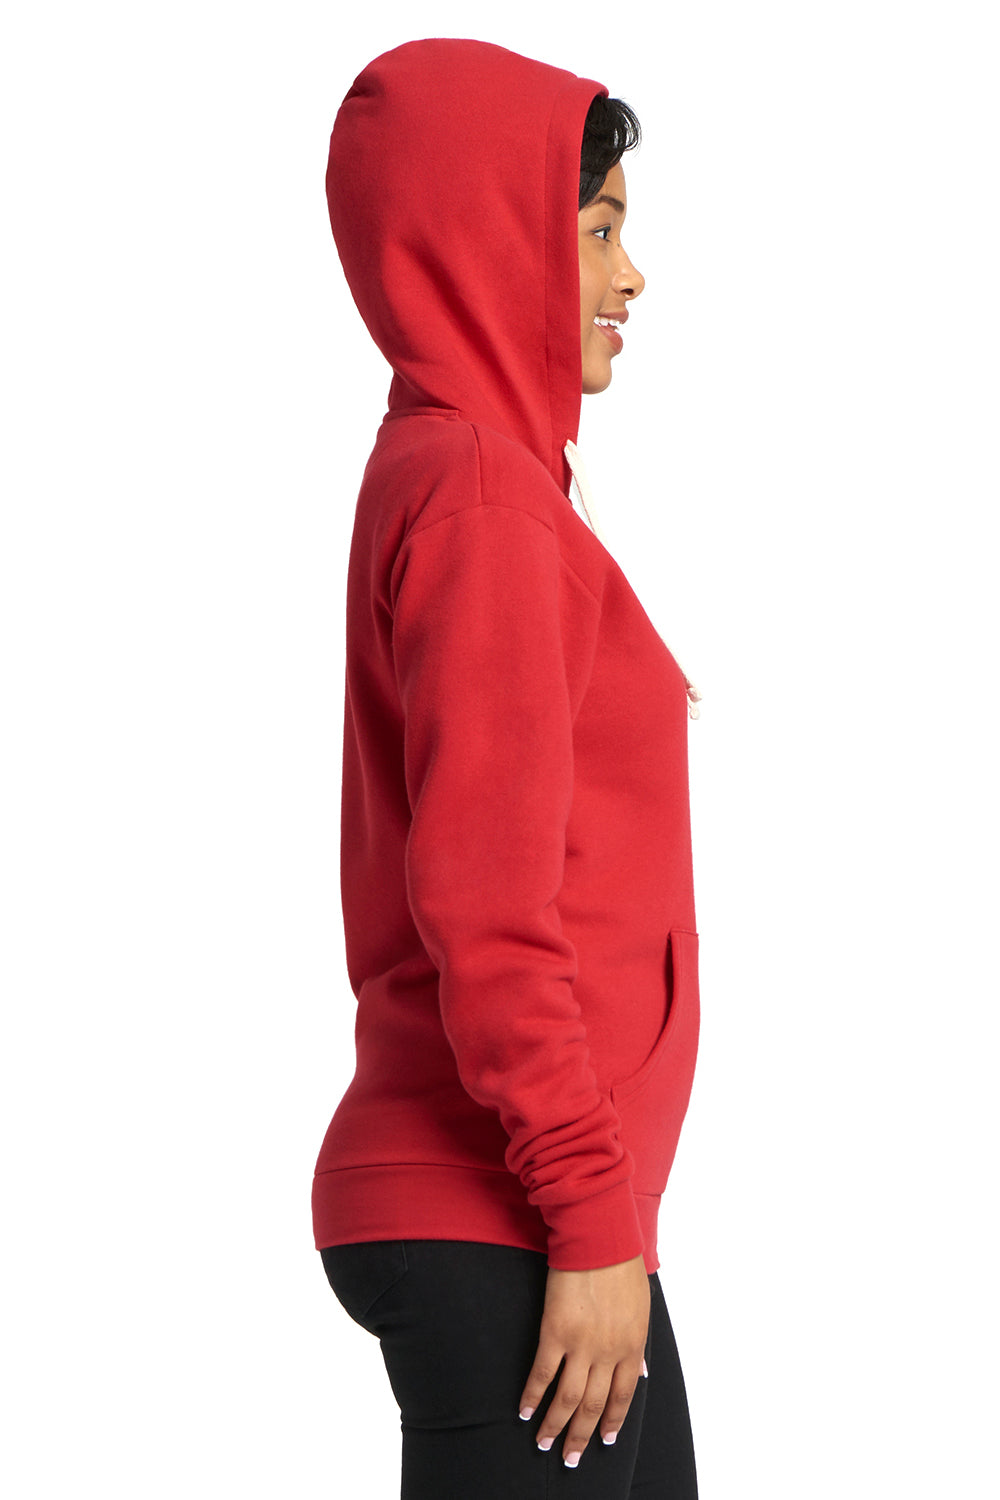 Next Level 9602 Fleece Full Zip Hooded Sweatshirt Hoodie Red Side